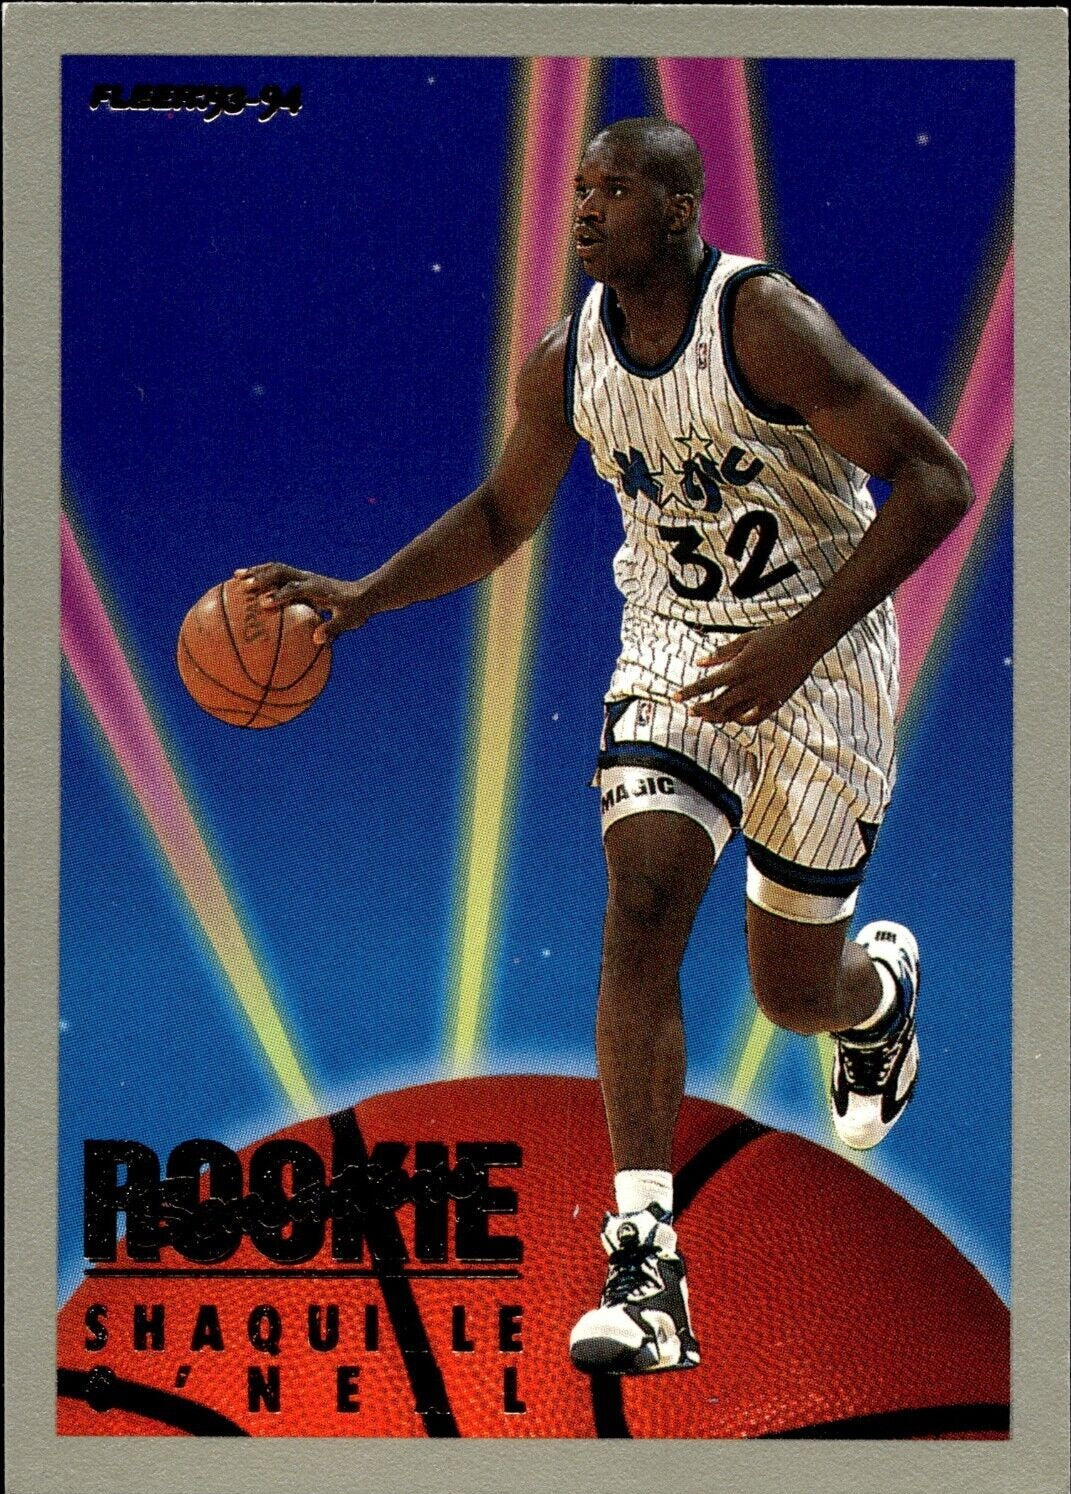 1993-94 Fleer NBA Basketball Series 1 Jumbo Pack